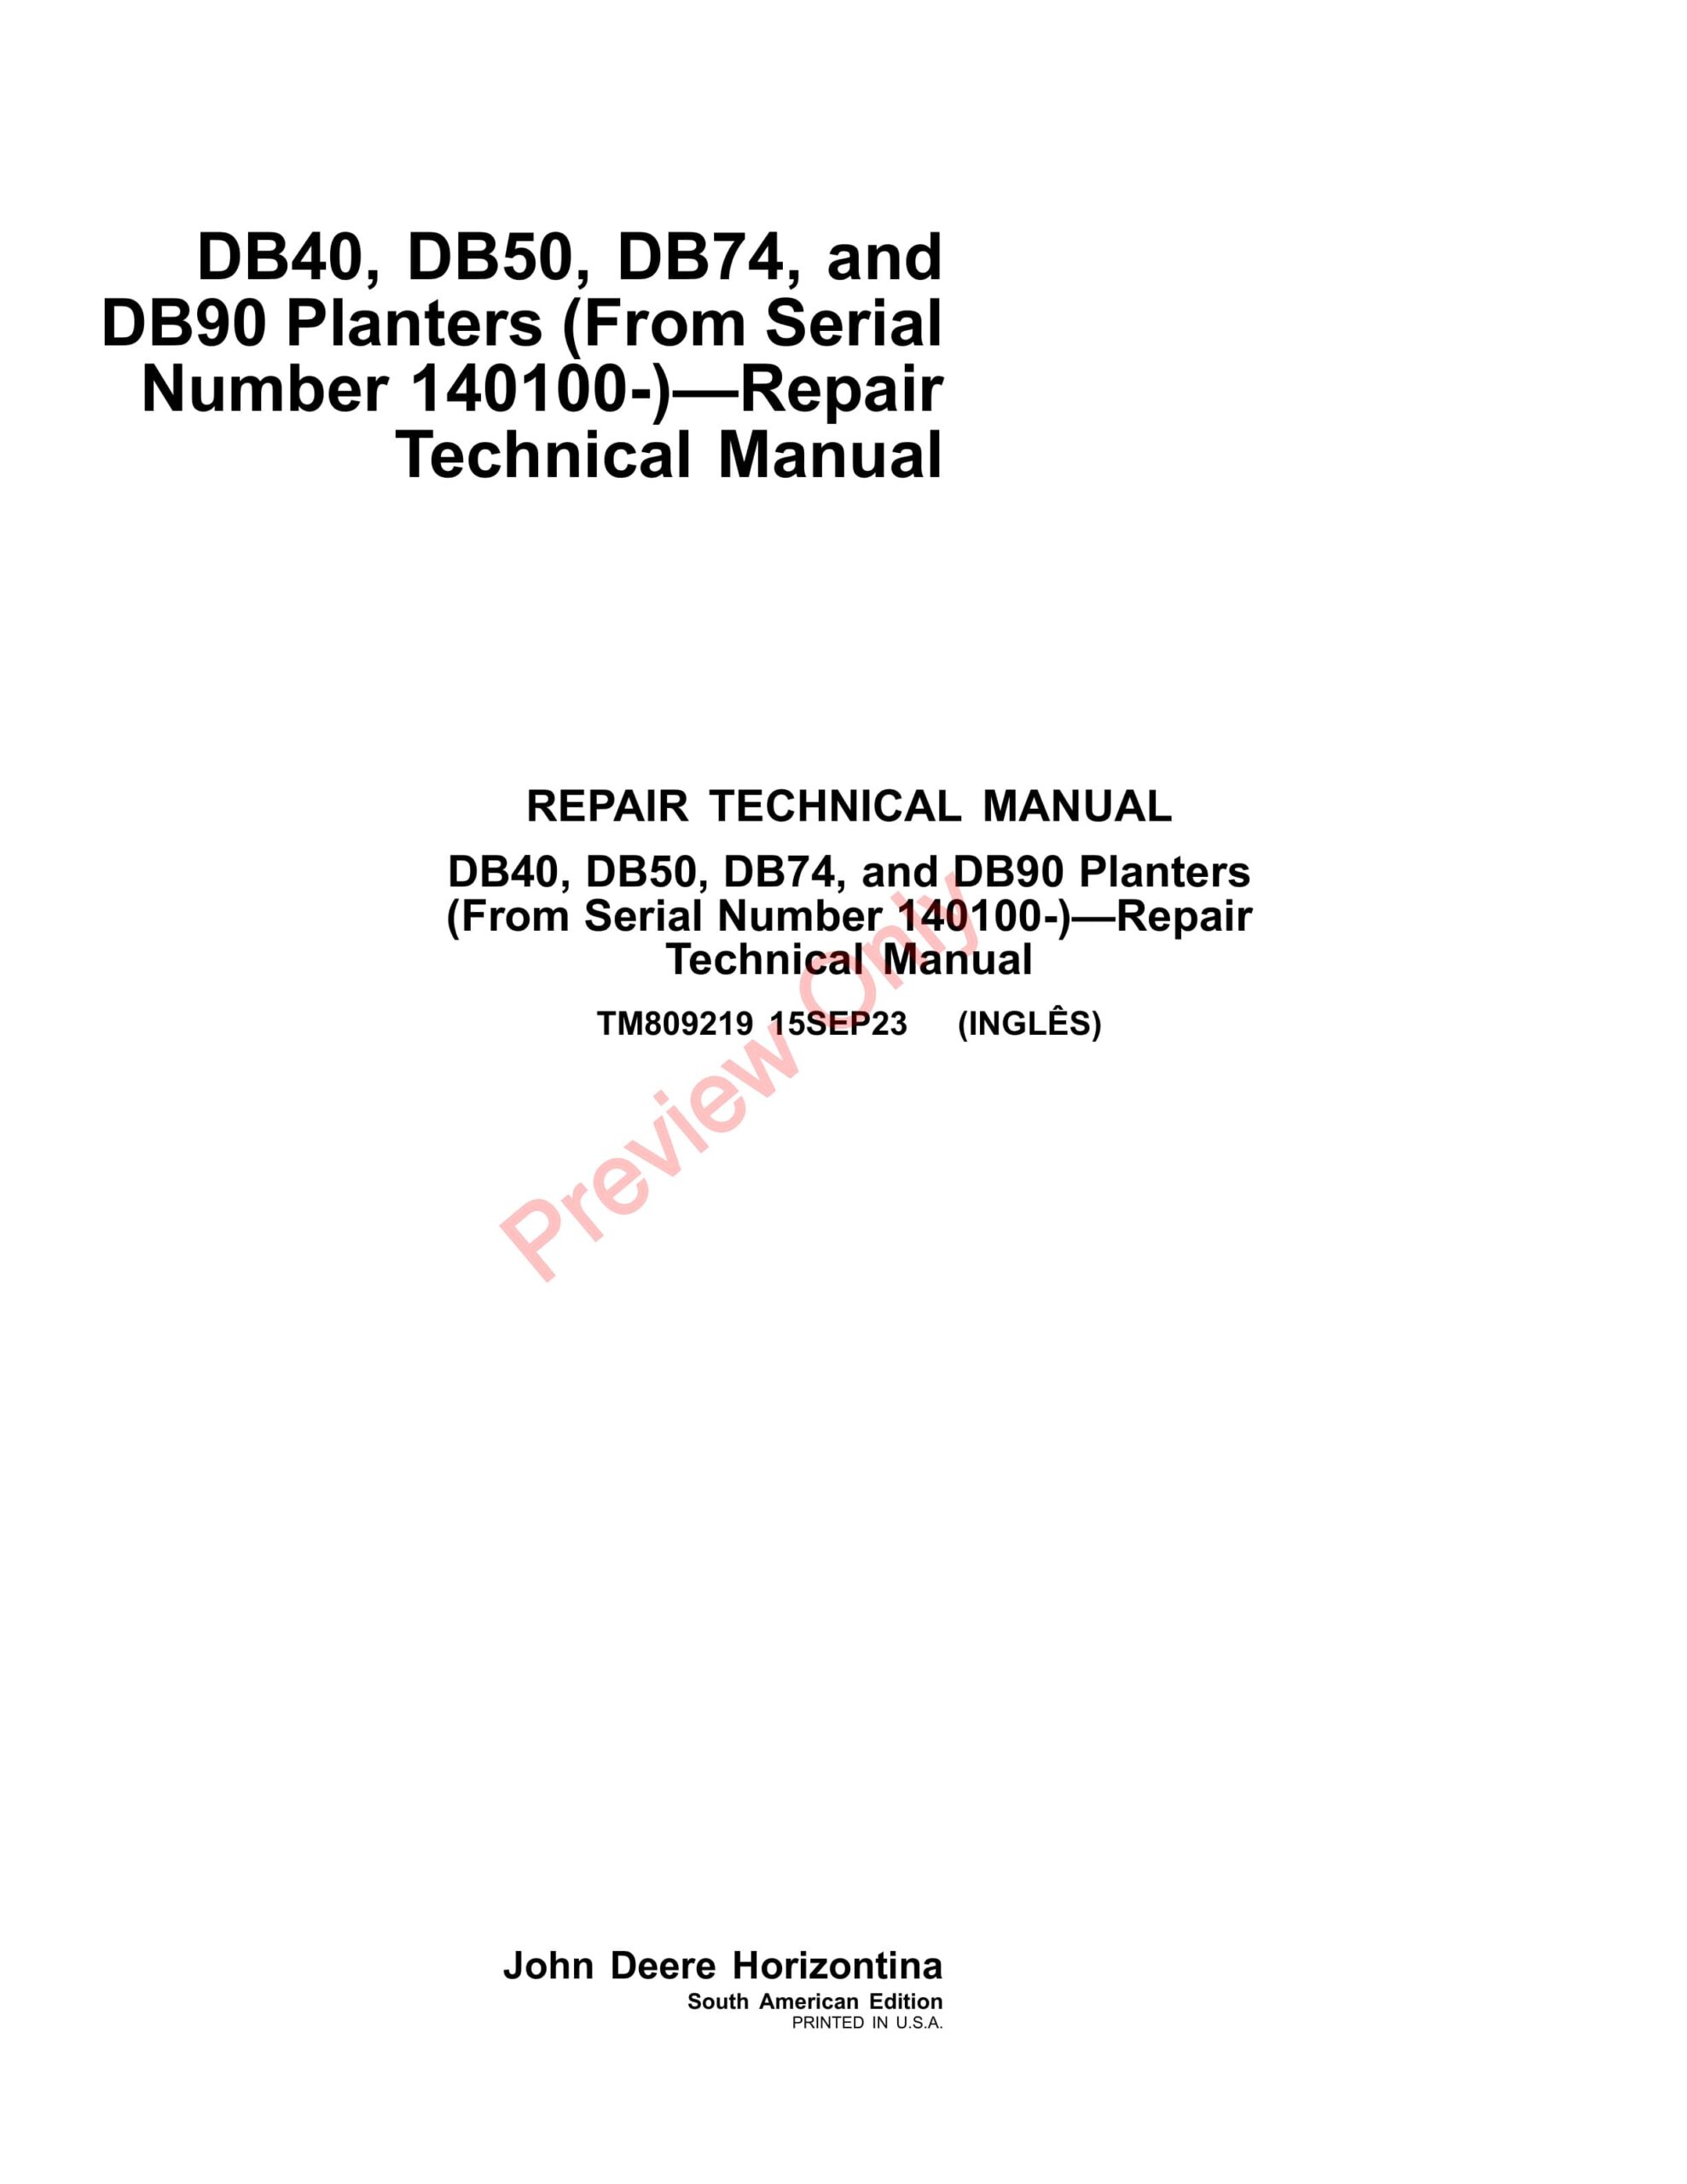 John Deere DB40, DB50, DB74, DB90 Planters (140100-) Repair Technical Manual TM809219 15SEP23-1